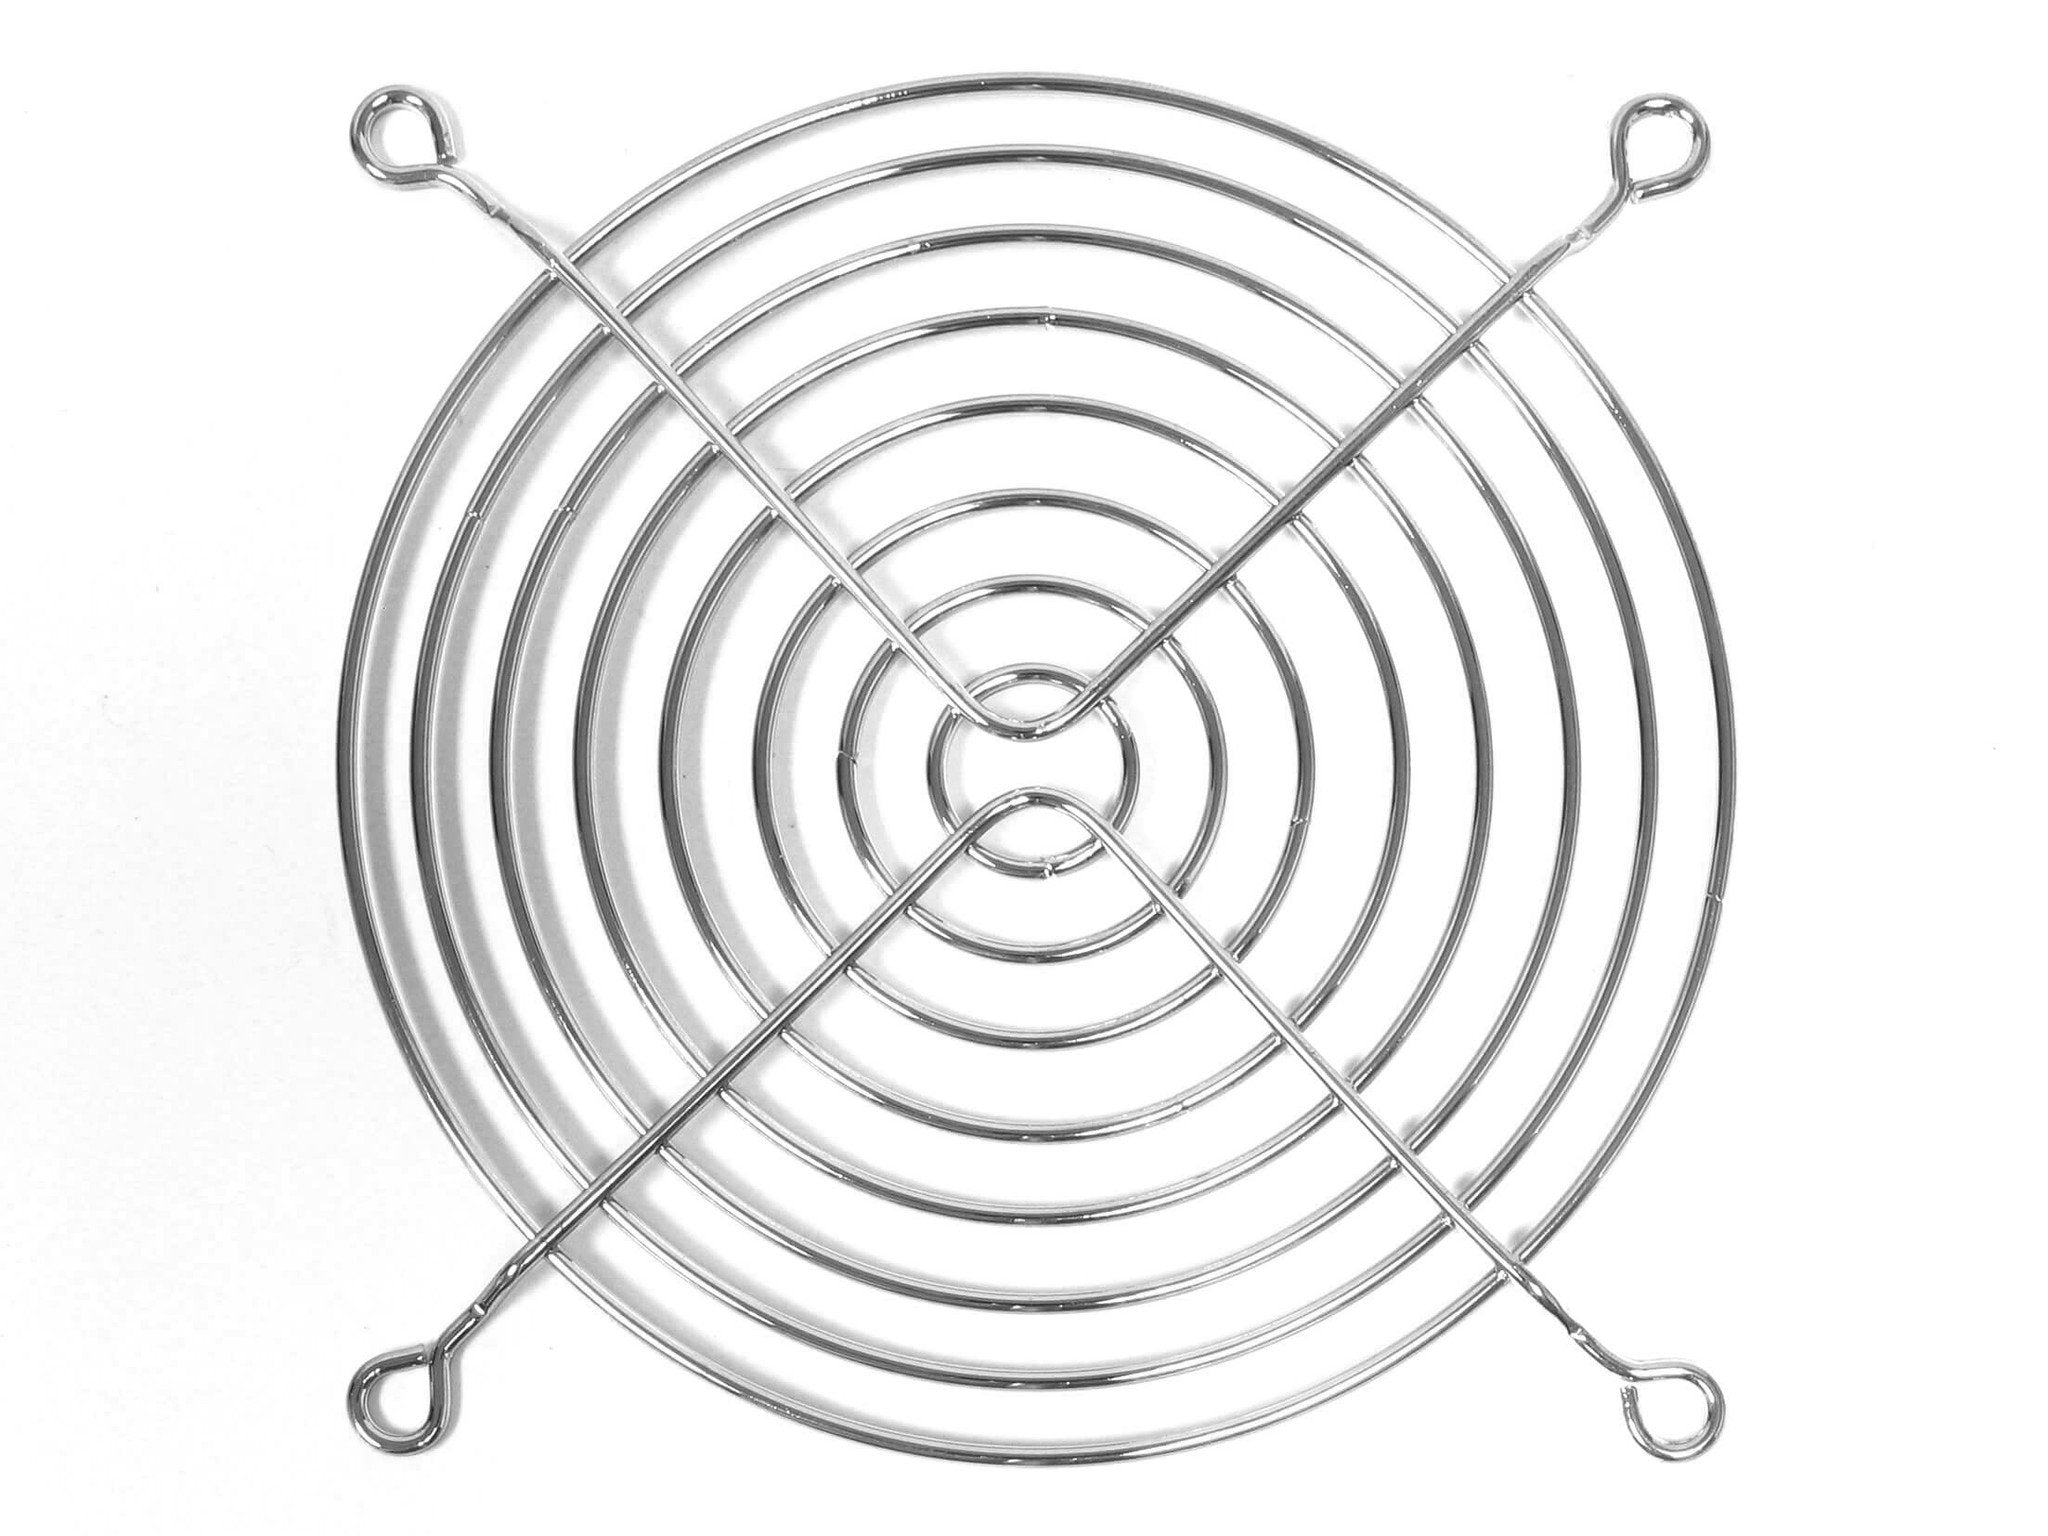 120mm Wire Fan Grill - Silver (2 Pack) - PrimoChill - KEEPING IT COOL